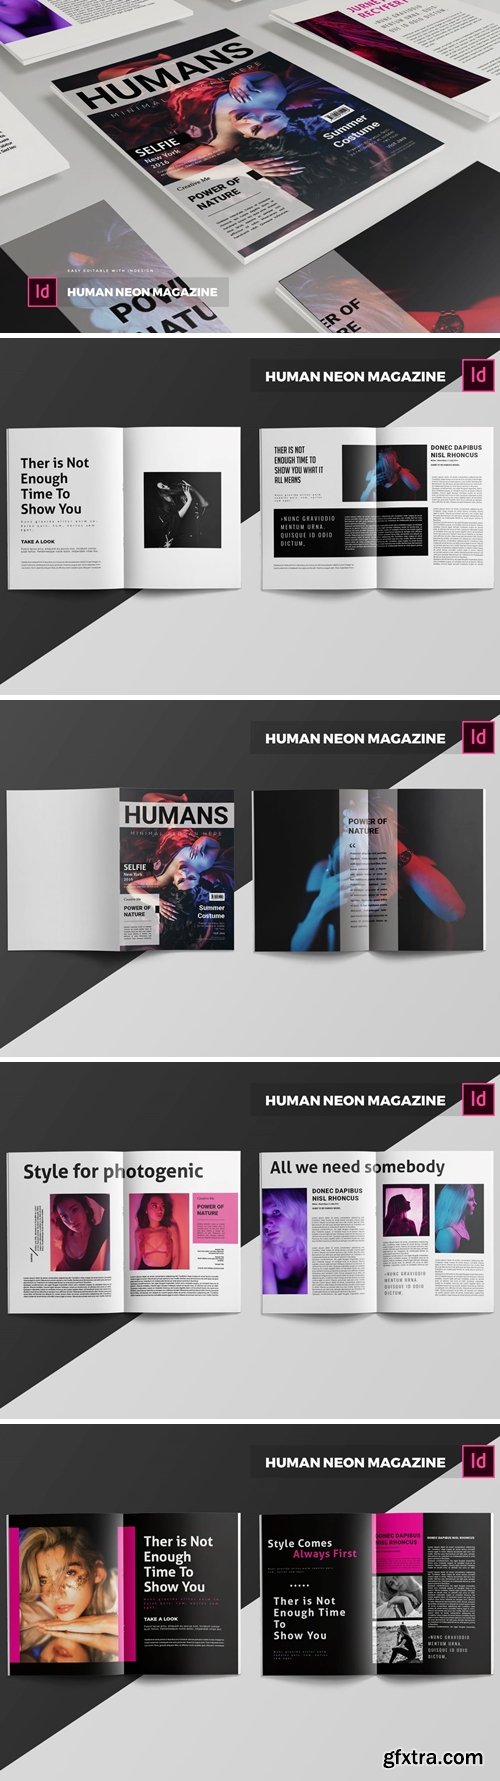 Human Neon | Magazine Template